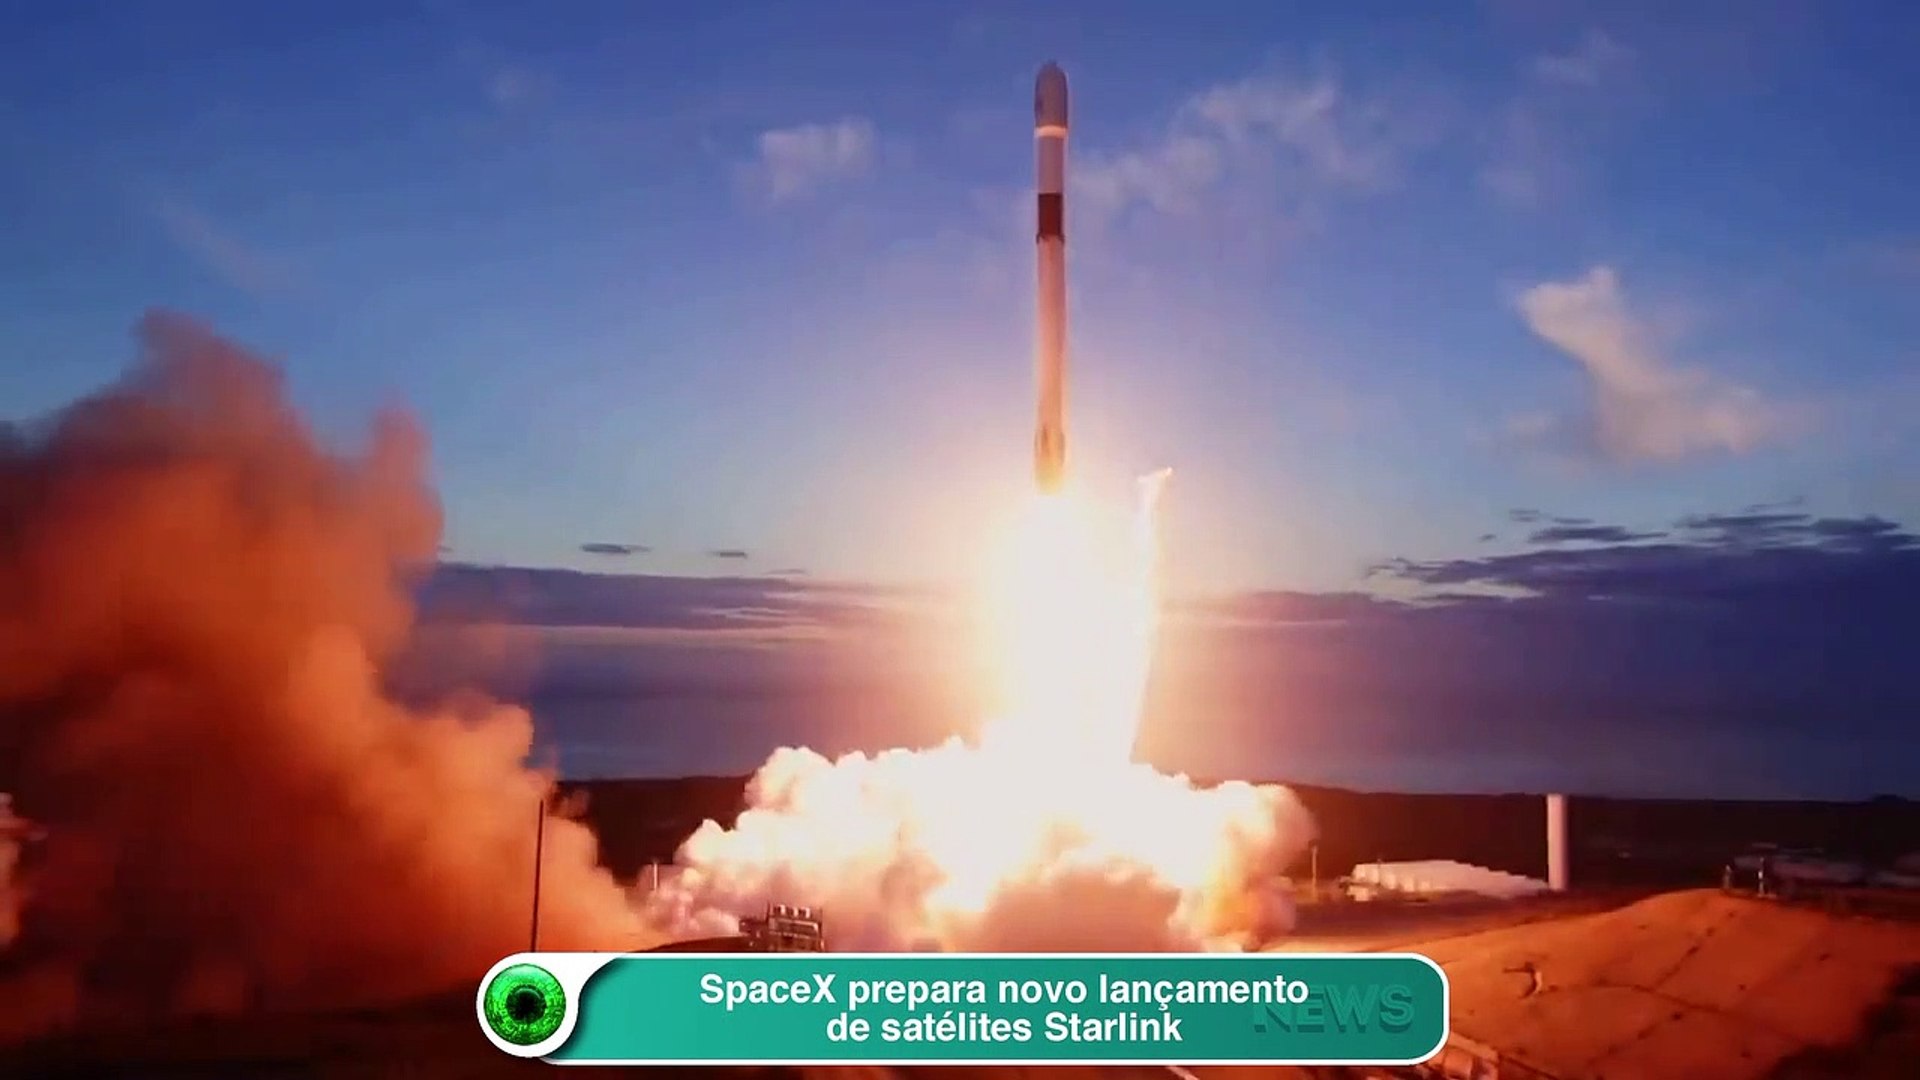 SpaceX prepara novo lançamento de satélites Starlink